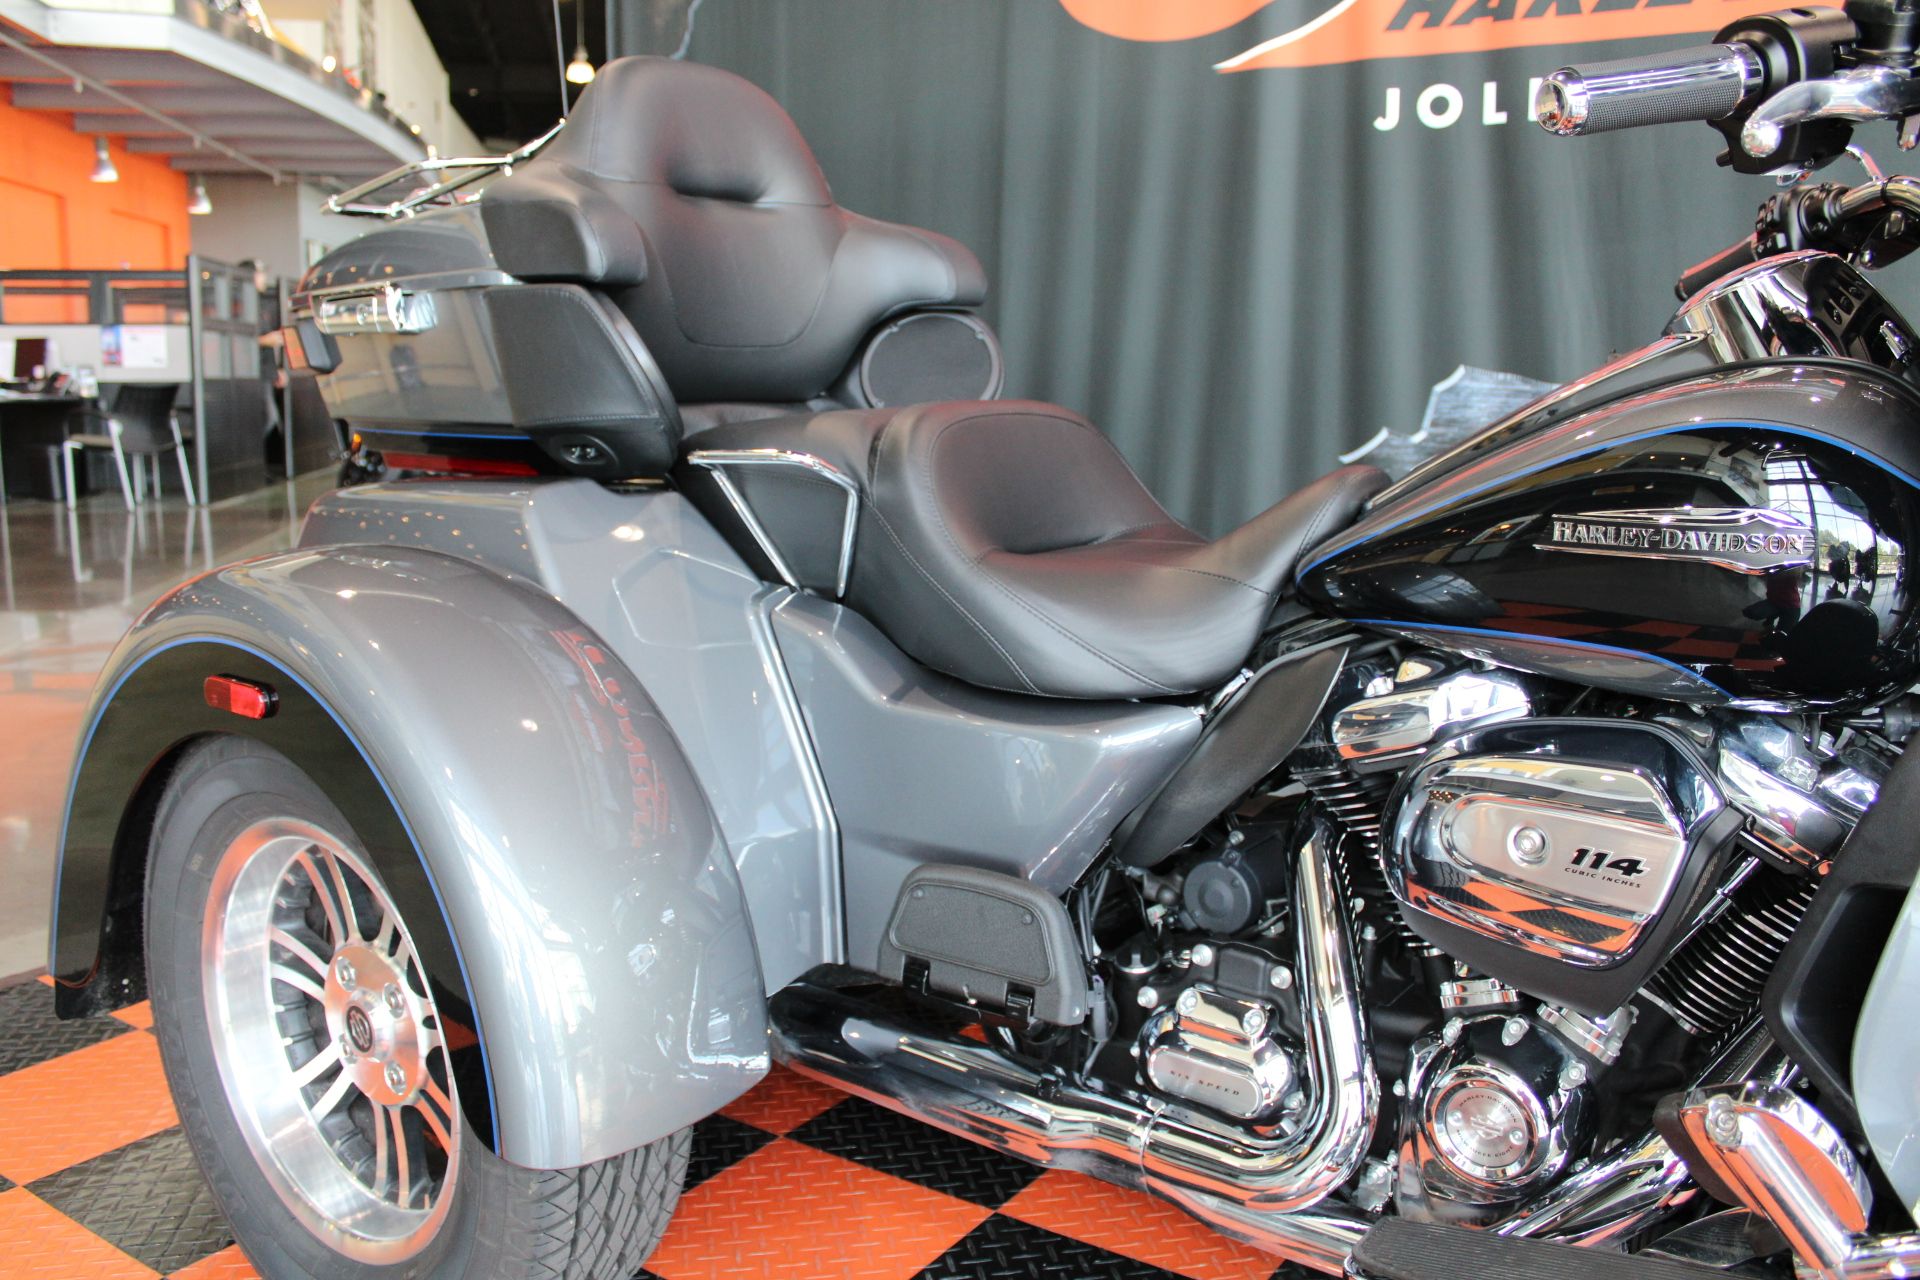 2021 Harley-Davidson Tri Glide® Ultra in Shorewood, Illinois - Photo 6